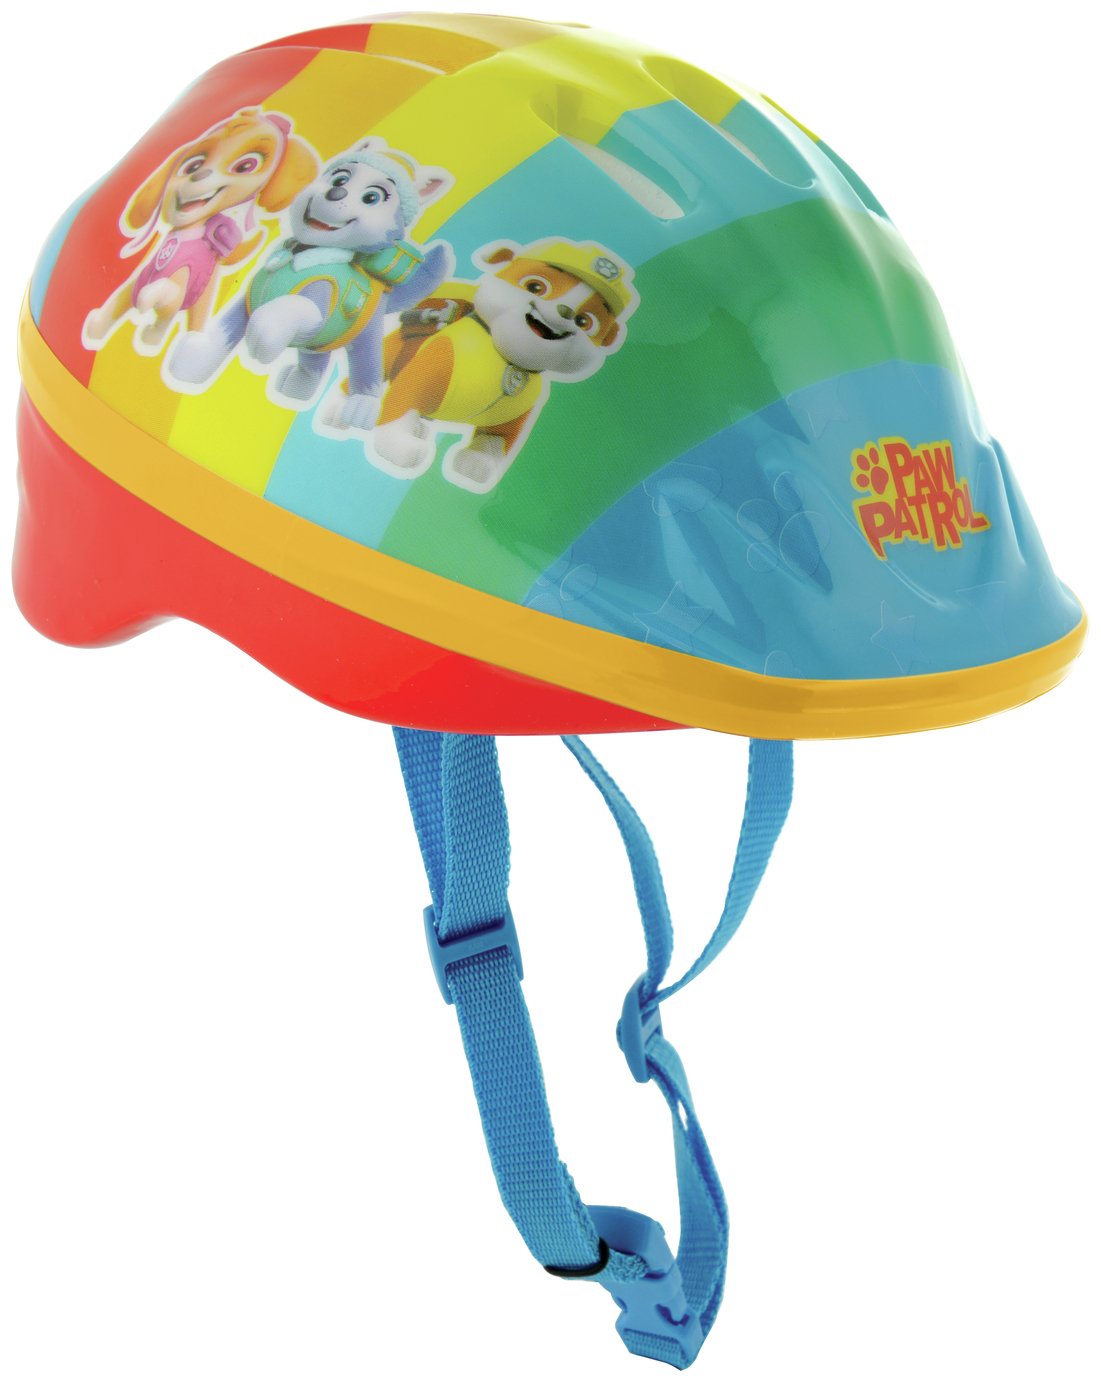 Paw Patrol Kids Bike Helmet, 48-52cm             